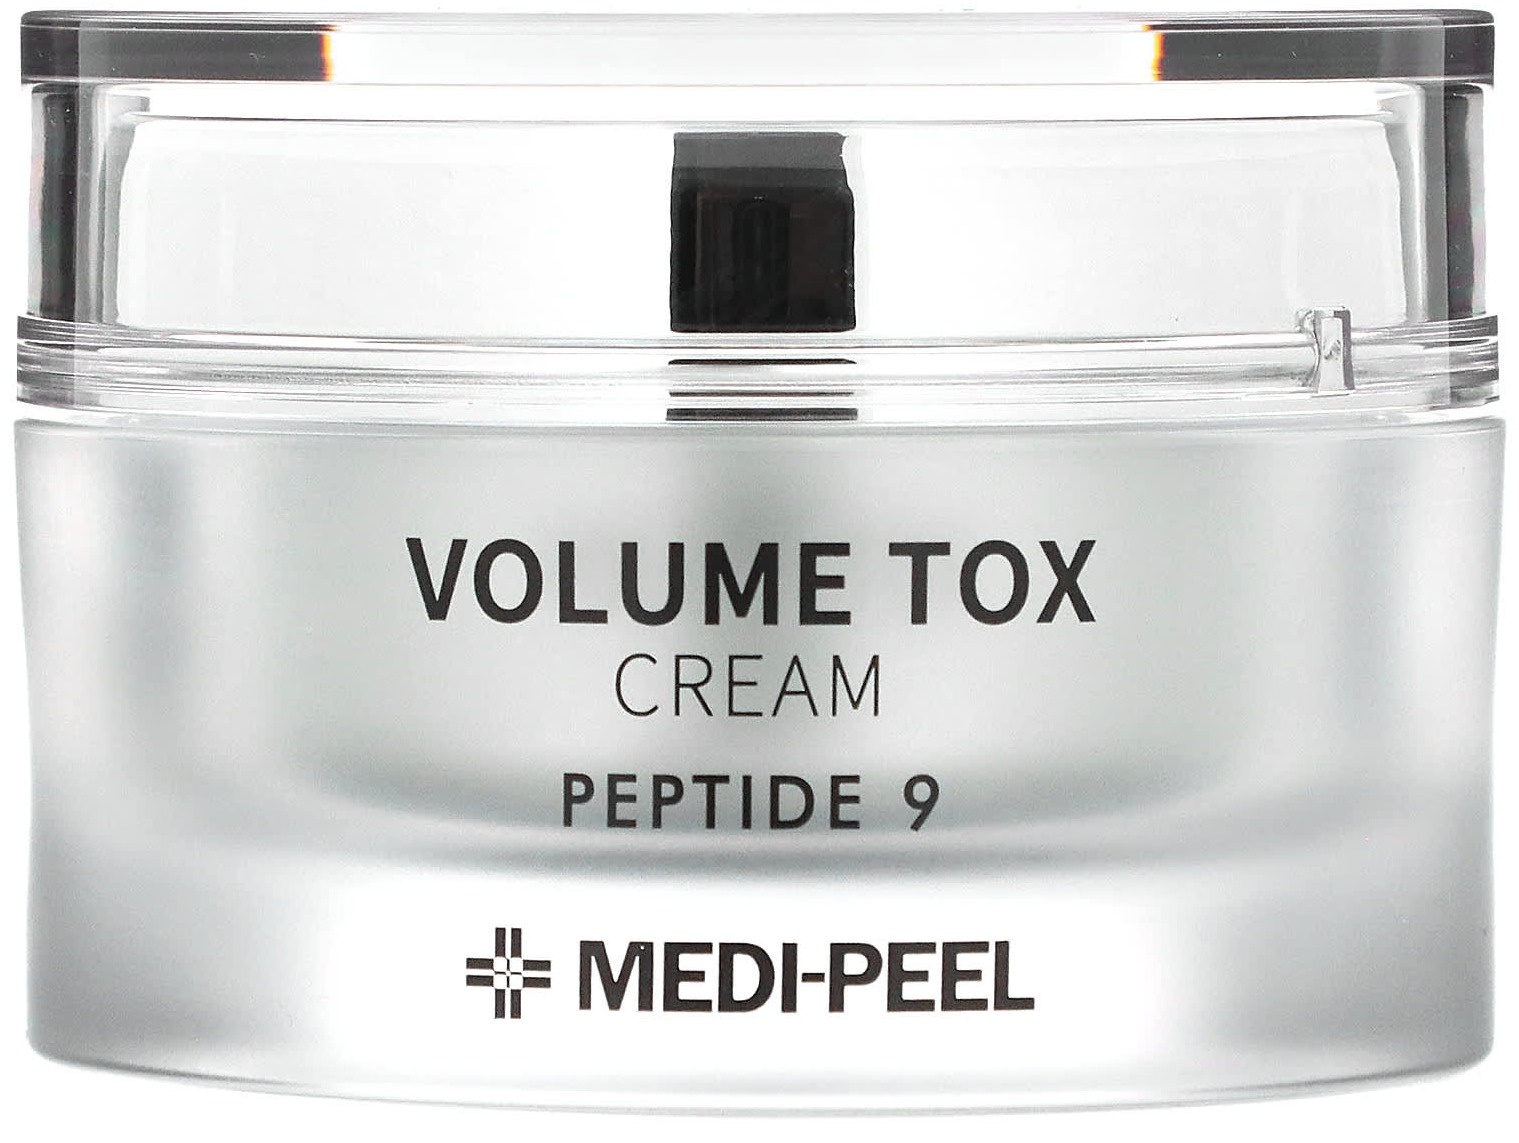 MEDI-PEEL Peptide 9 Volume Tox Cream